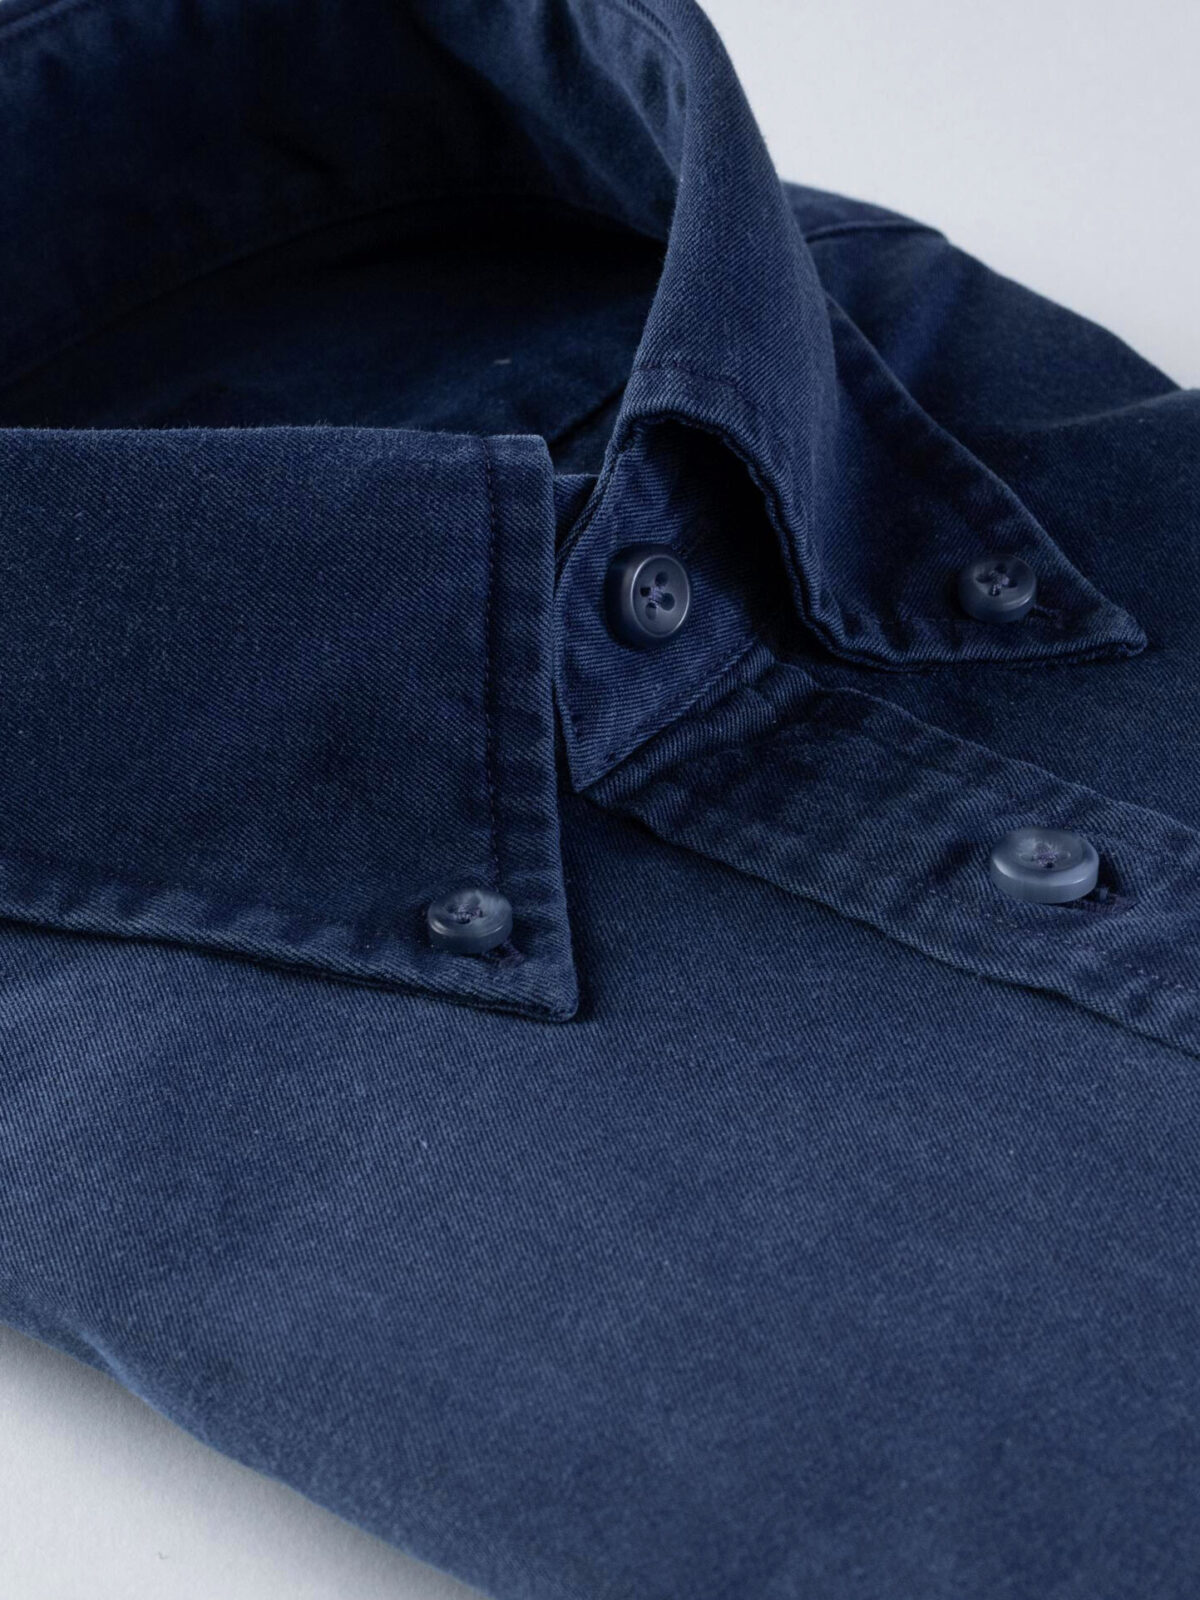 Albiate Washed Dark Slate Blue Denim Shirt by Proper Cloth